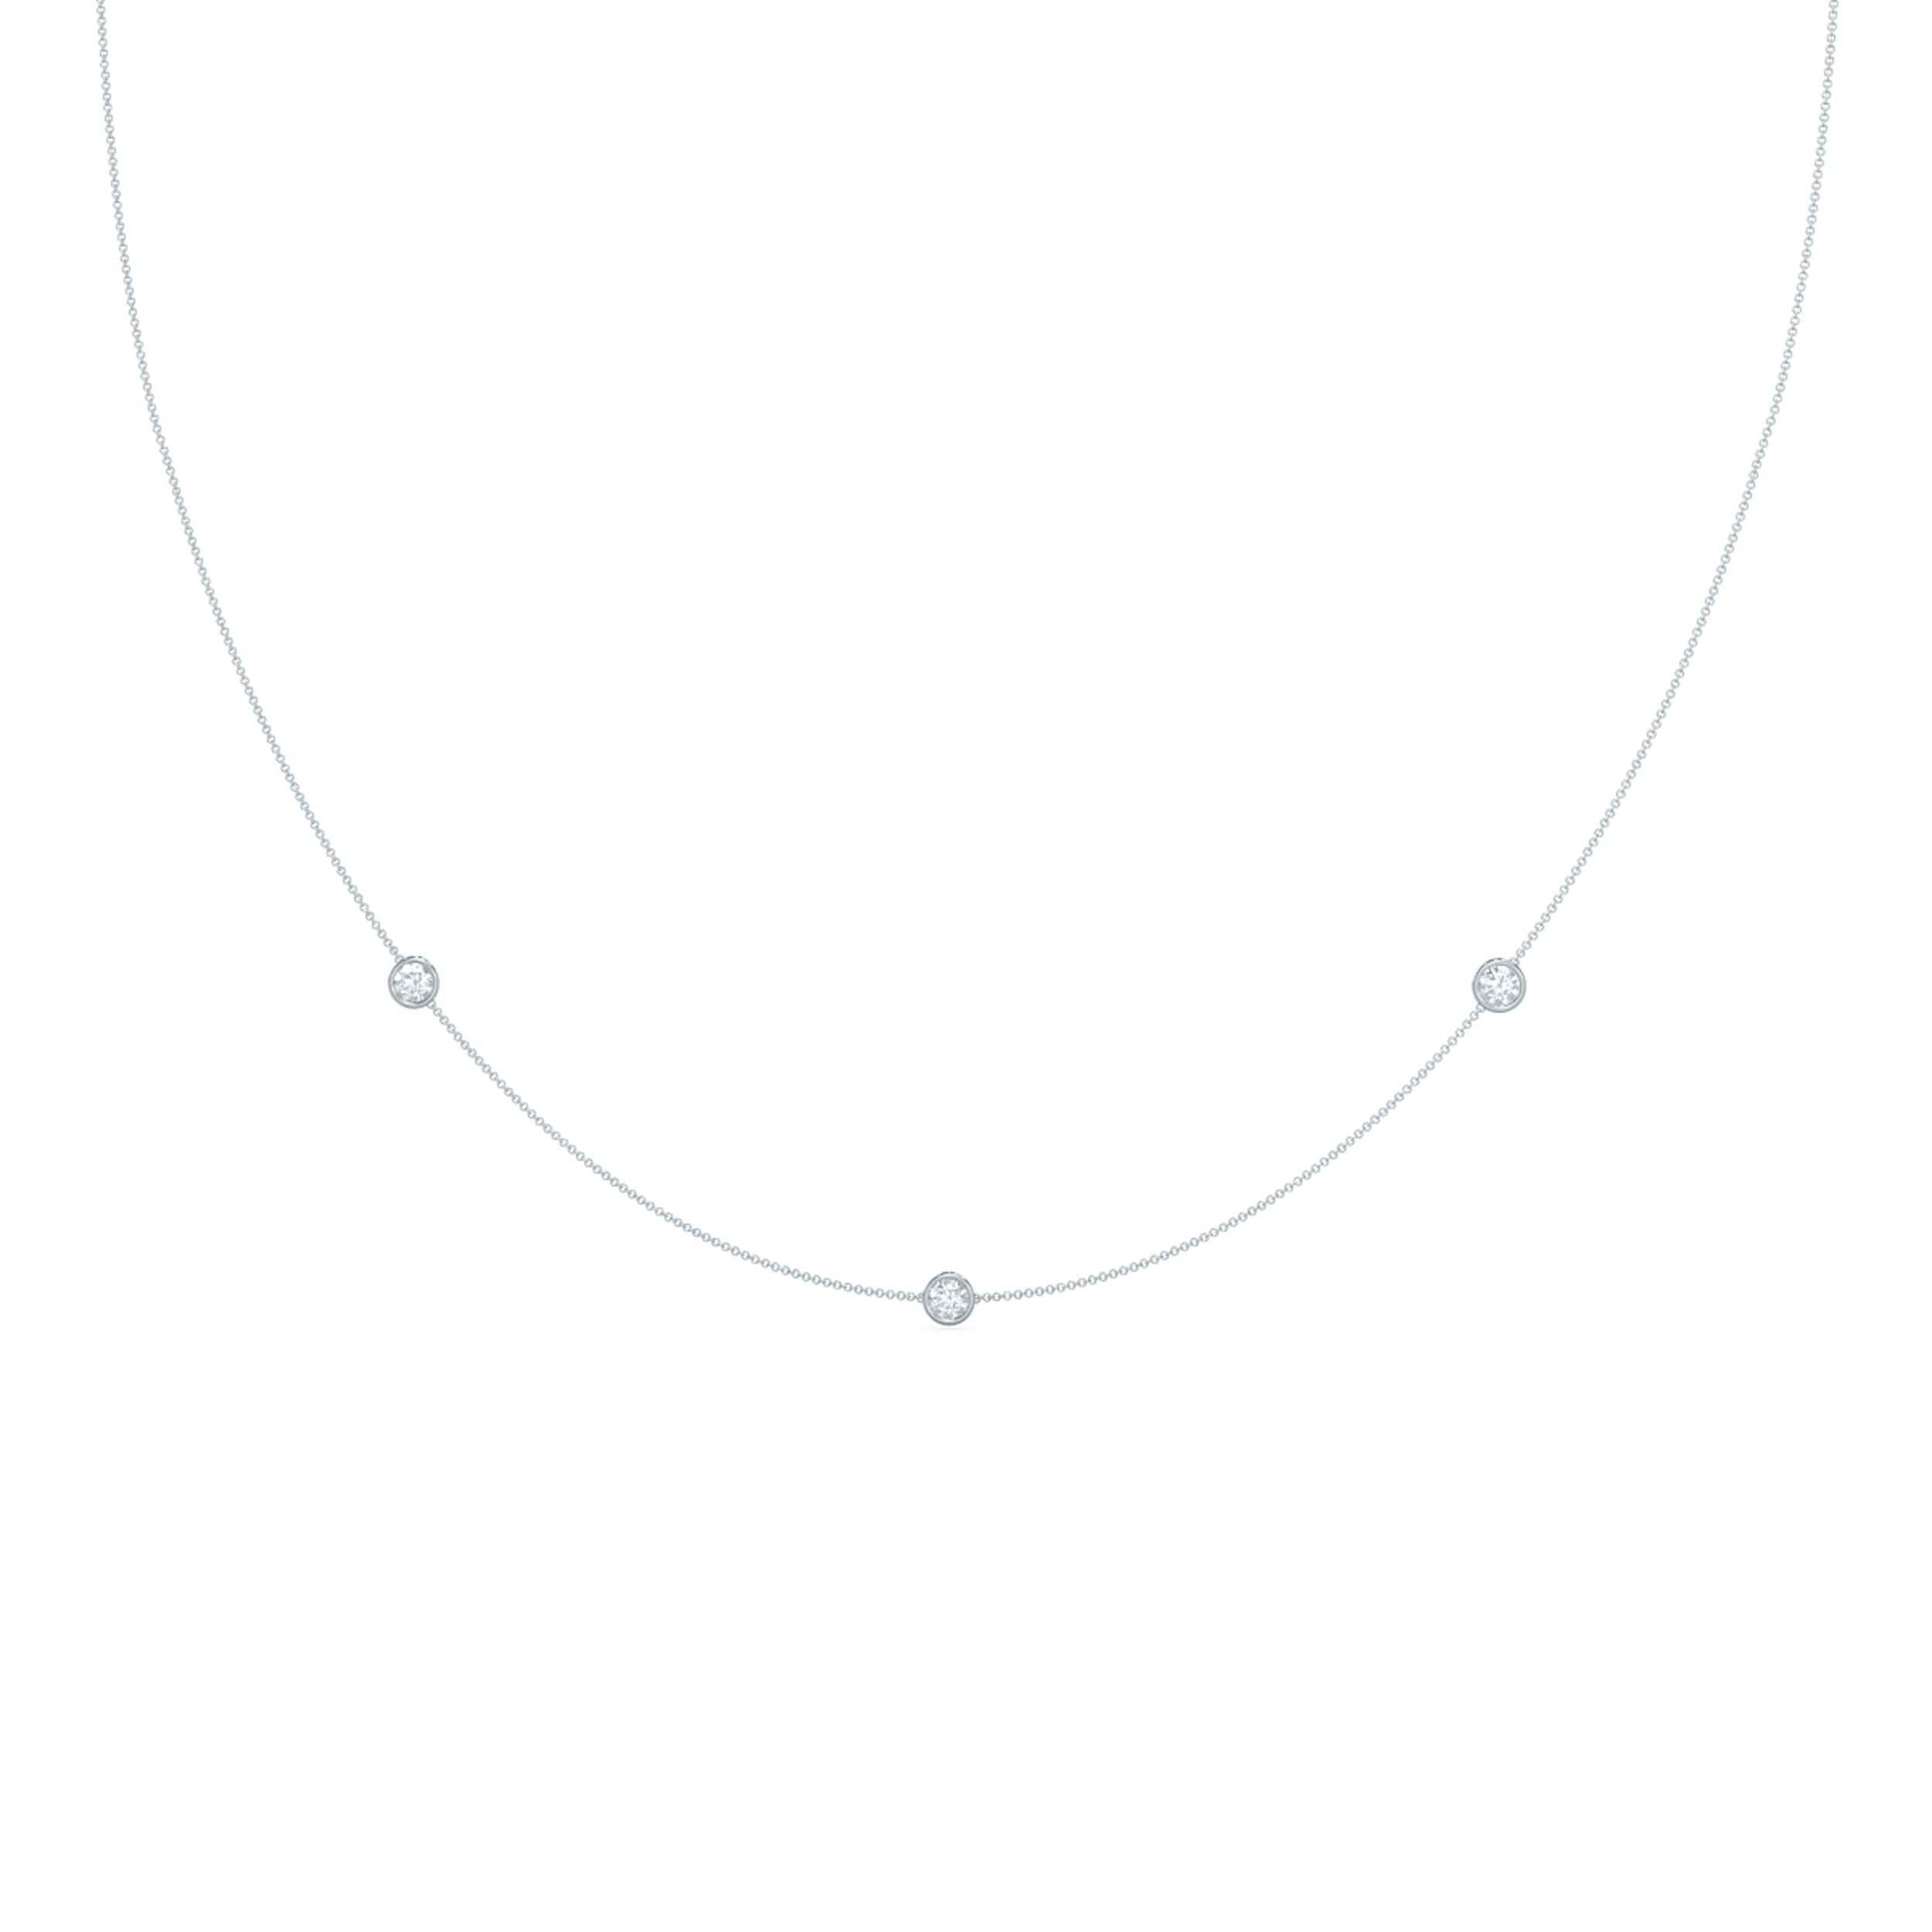 lab-created-diamond-necklace-by-the-yard-white-gold_1574666741419-8VWSY8MH05JZKELHZYY9